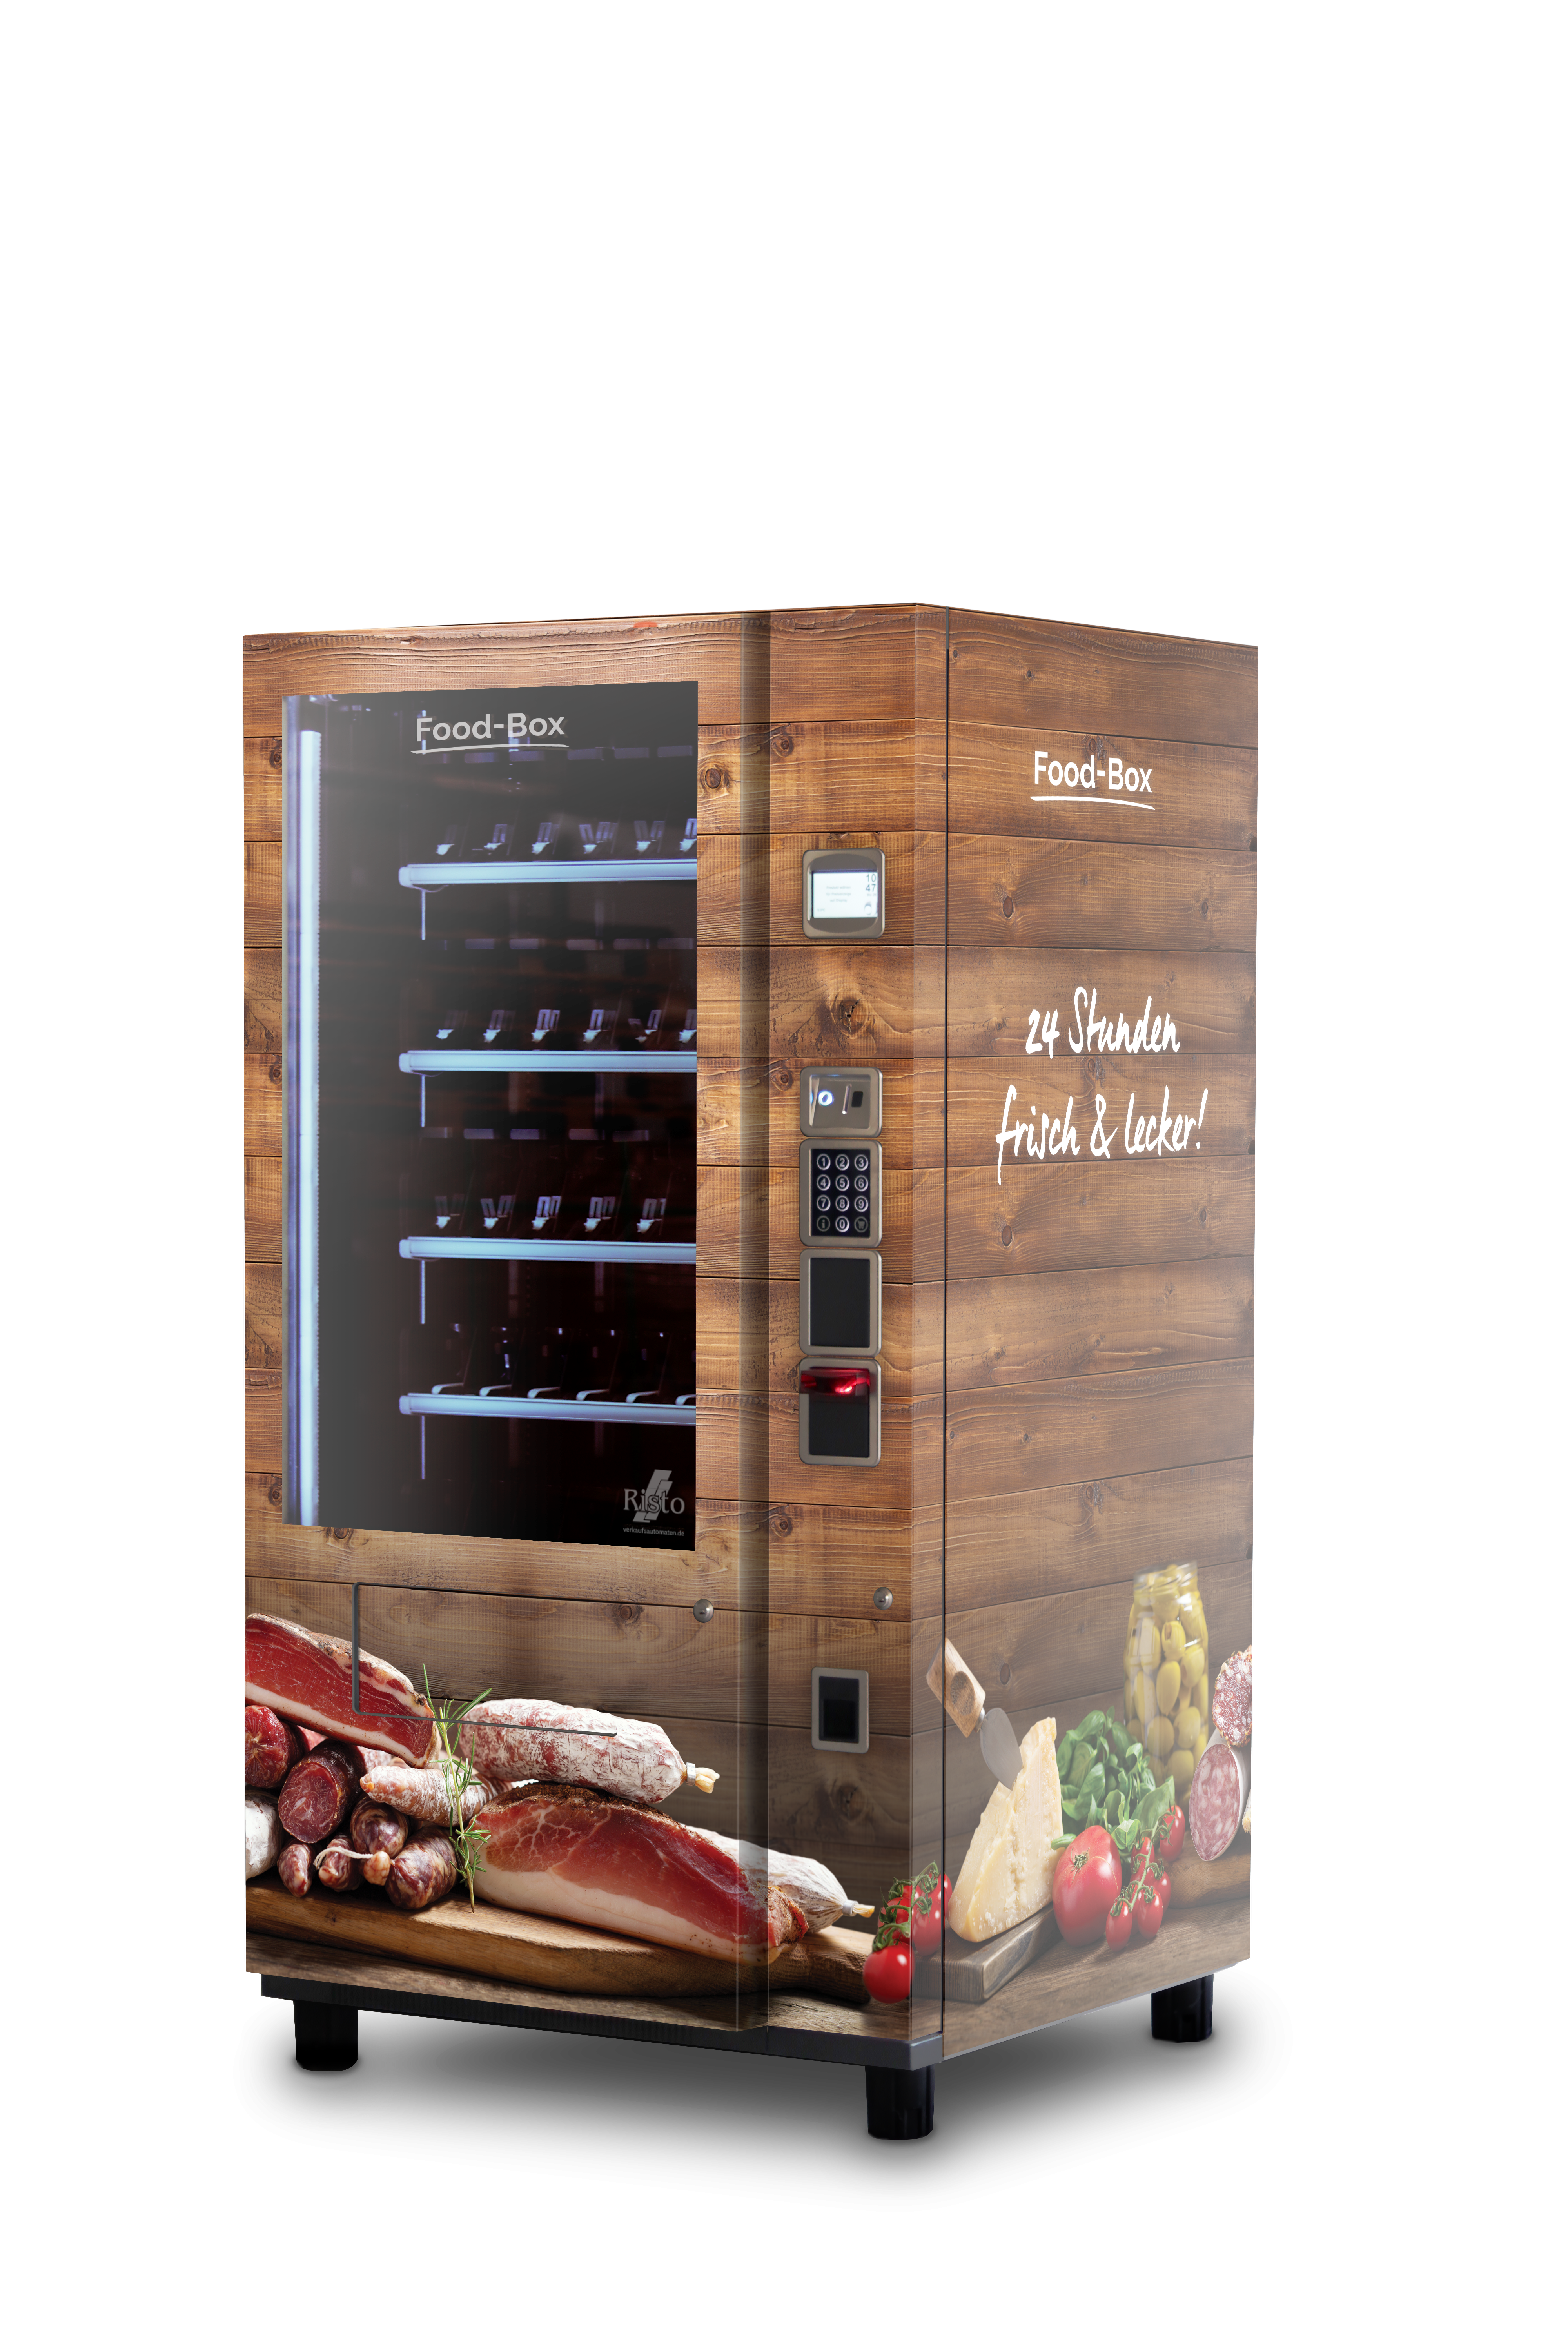 Lebensmittelautomat Design Wurstwaren Holz